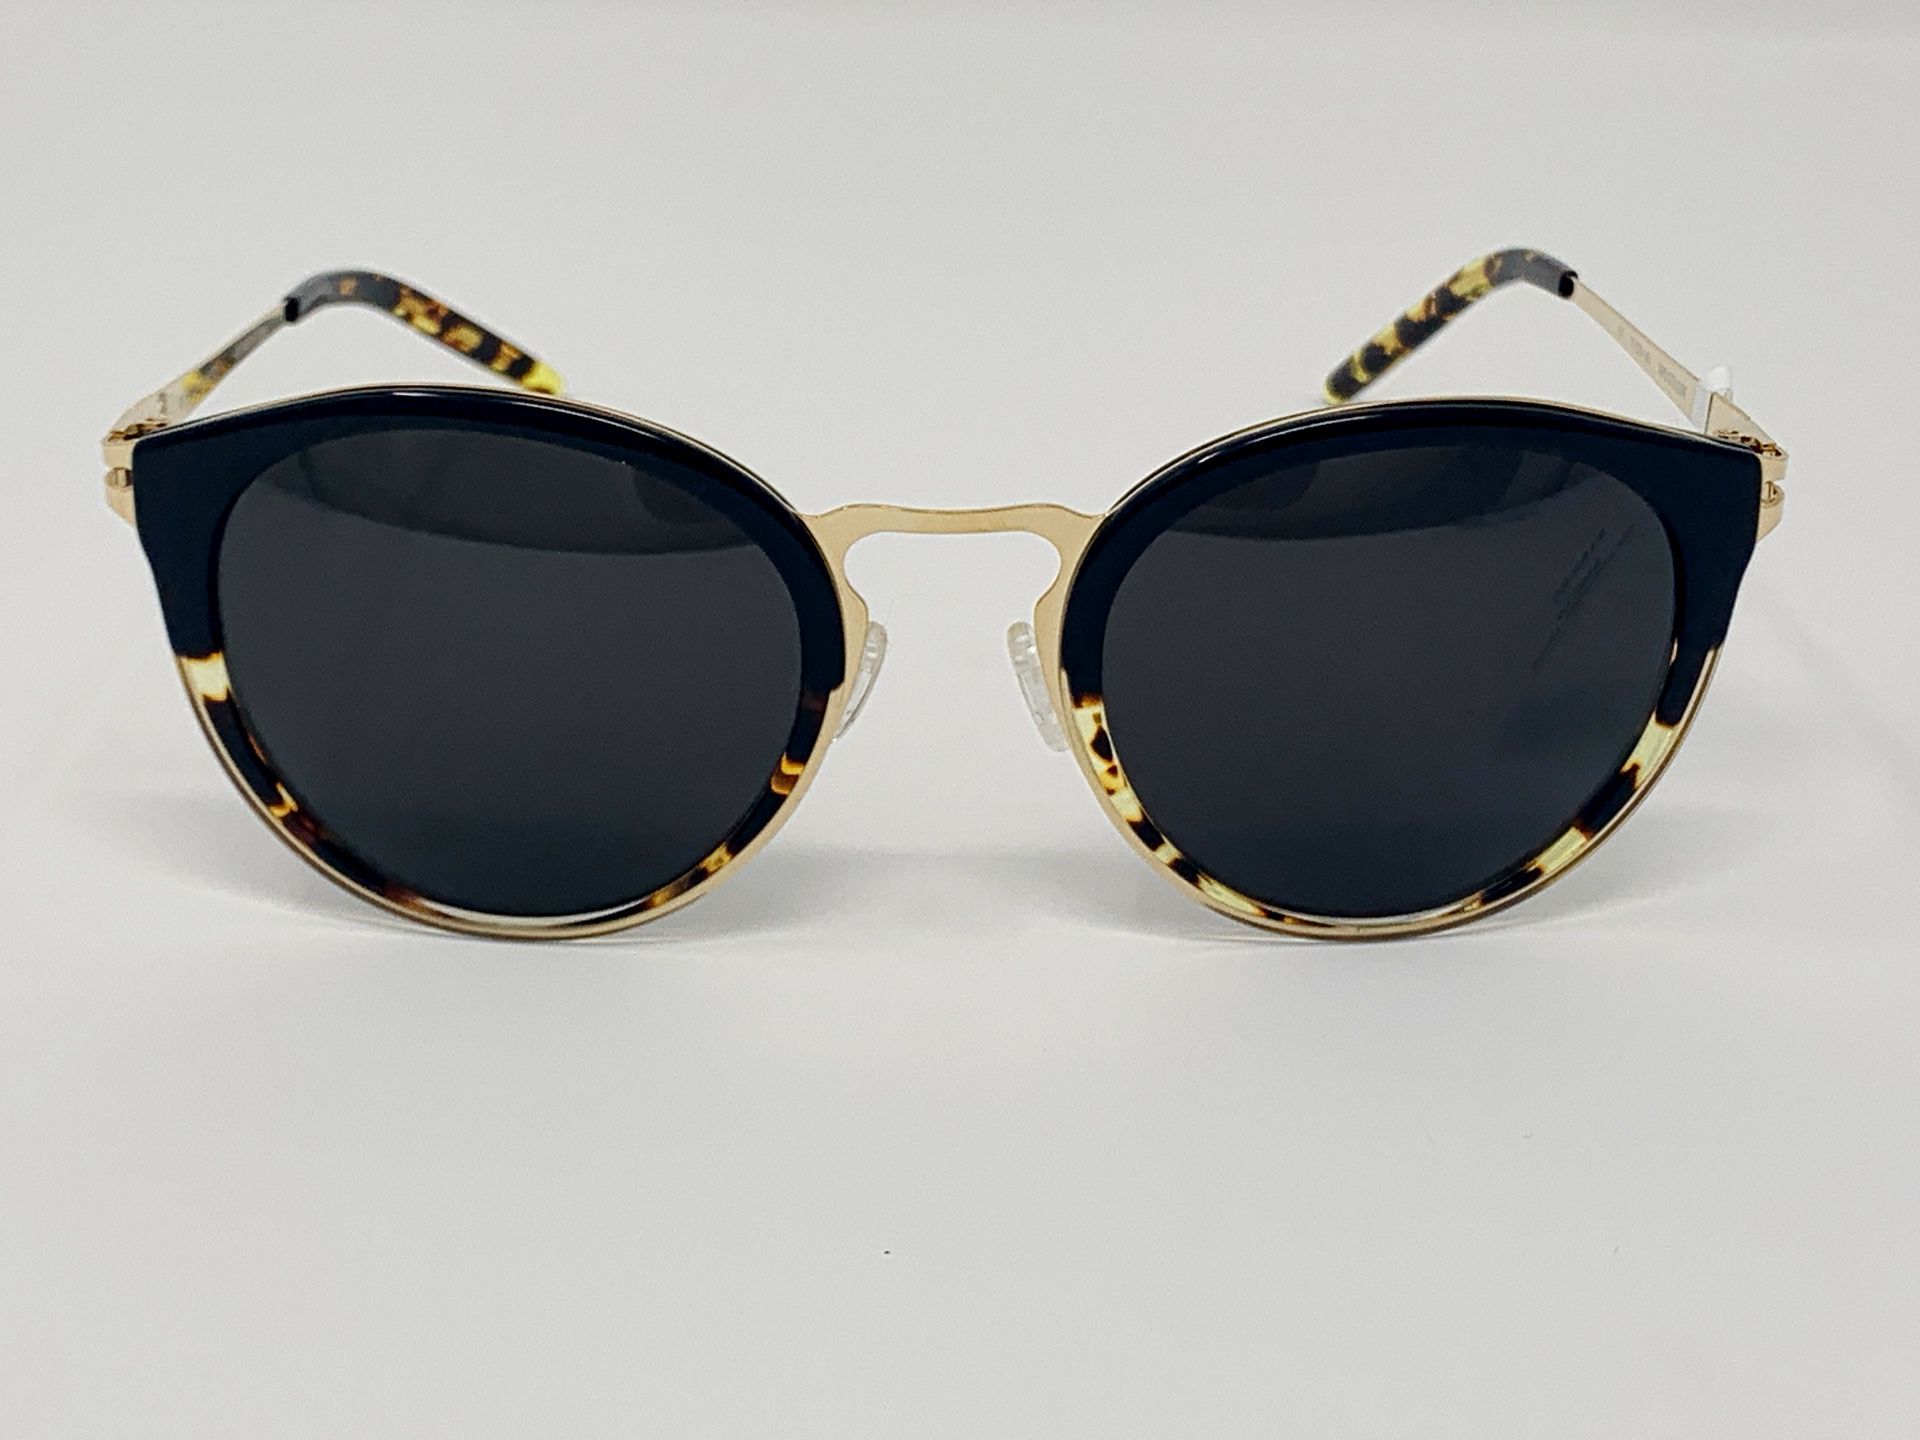 NWT Barton Perreira A050 Sunglasses - $565 List Price